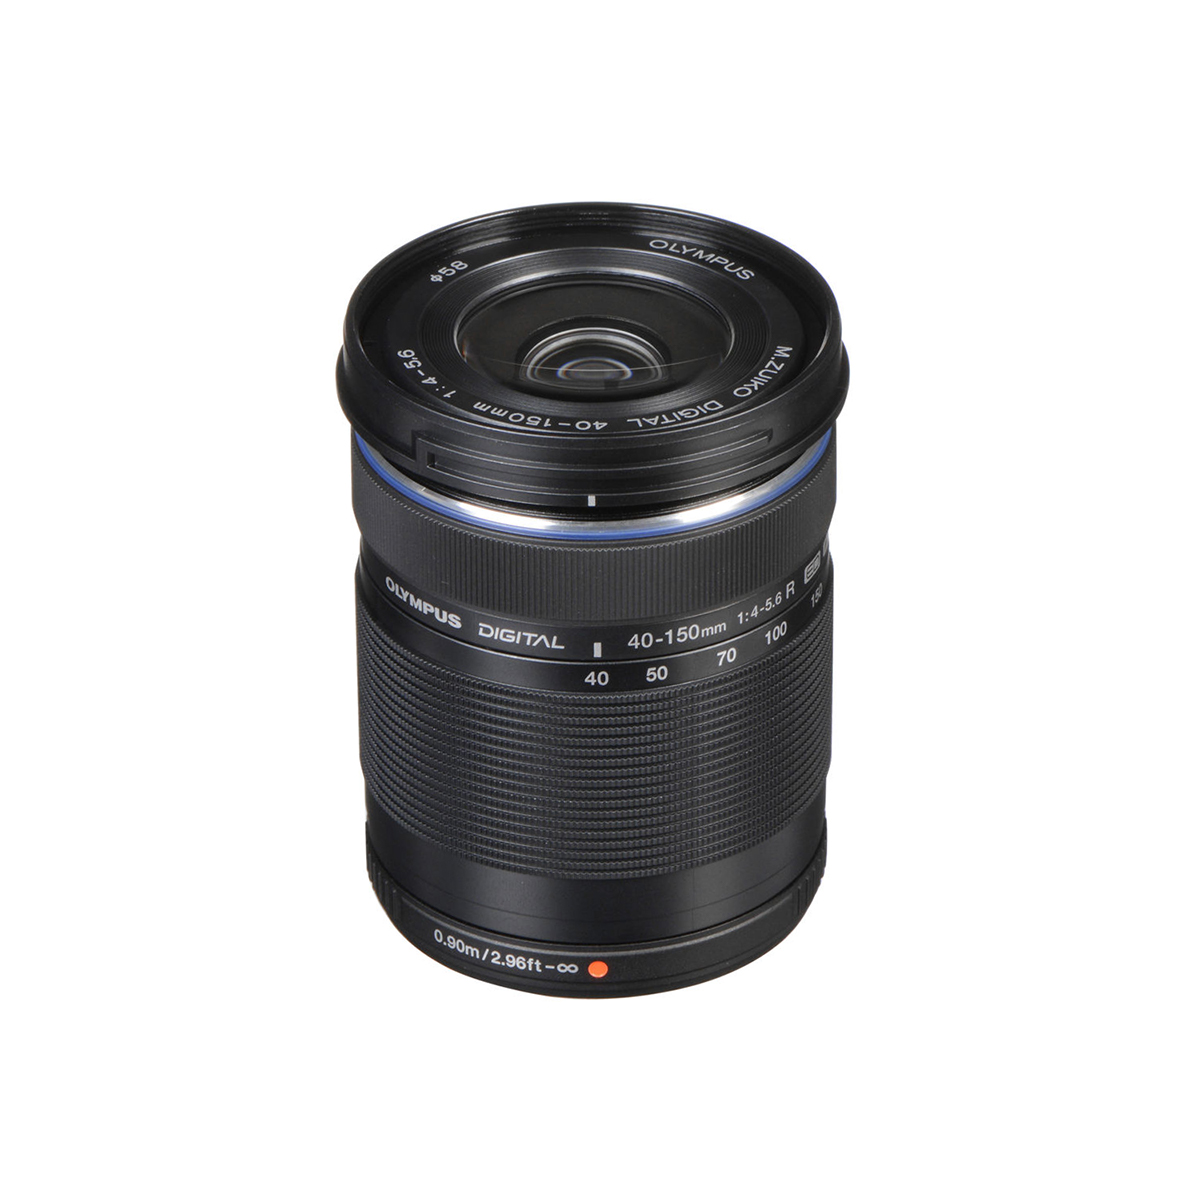 Olympus M.Zuiko Digital ED 40-150mm f/4.0-5.6 R Lens (Black) - The